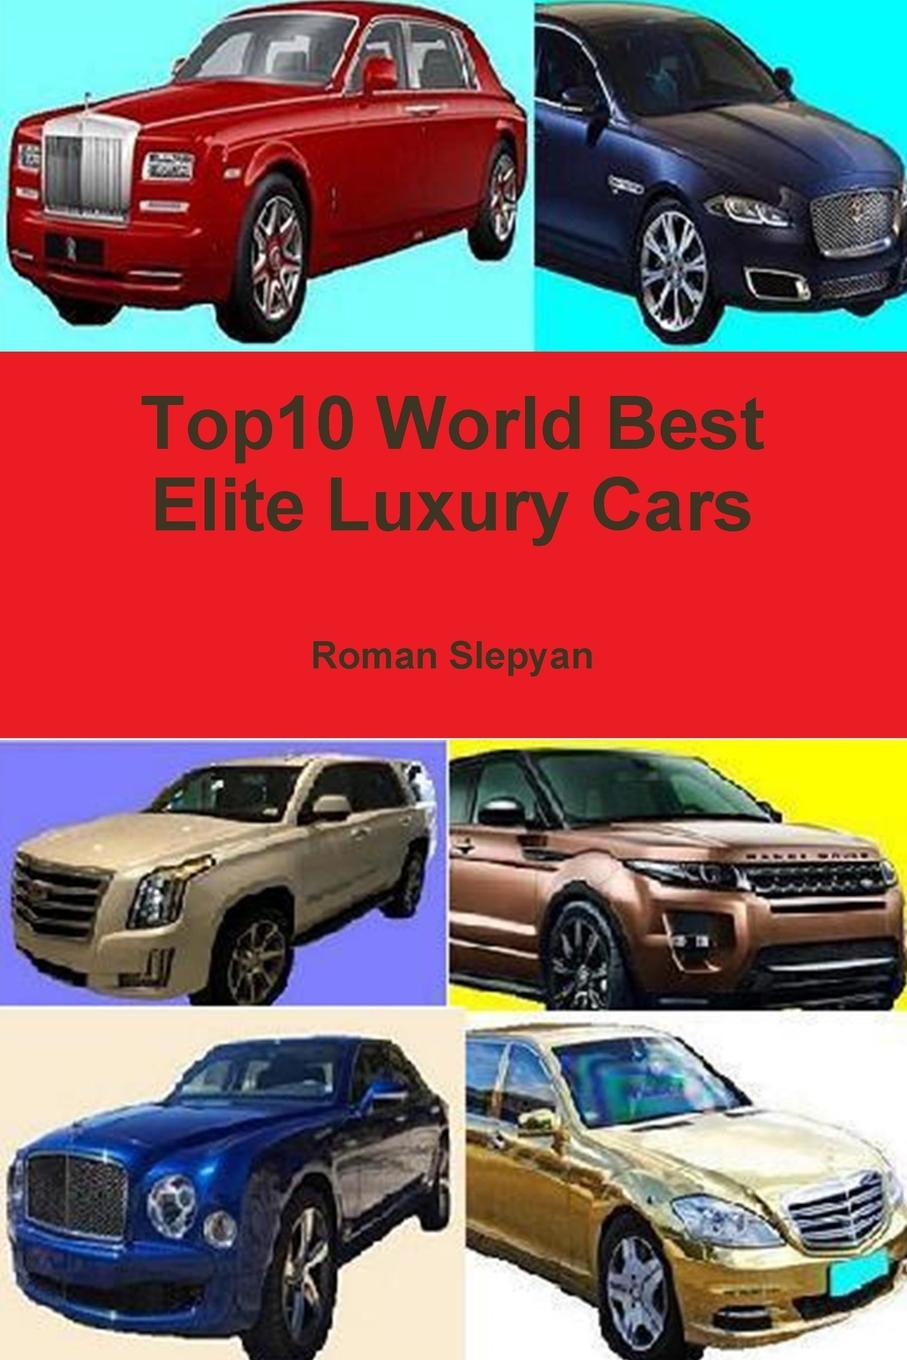 Top10 World Best Elite Luxury Cars